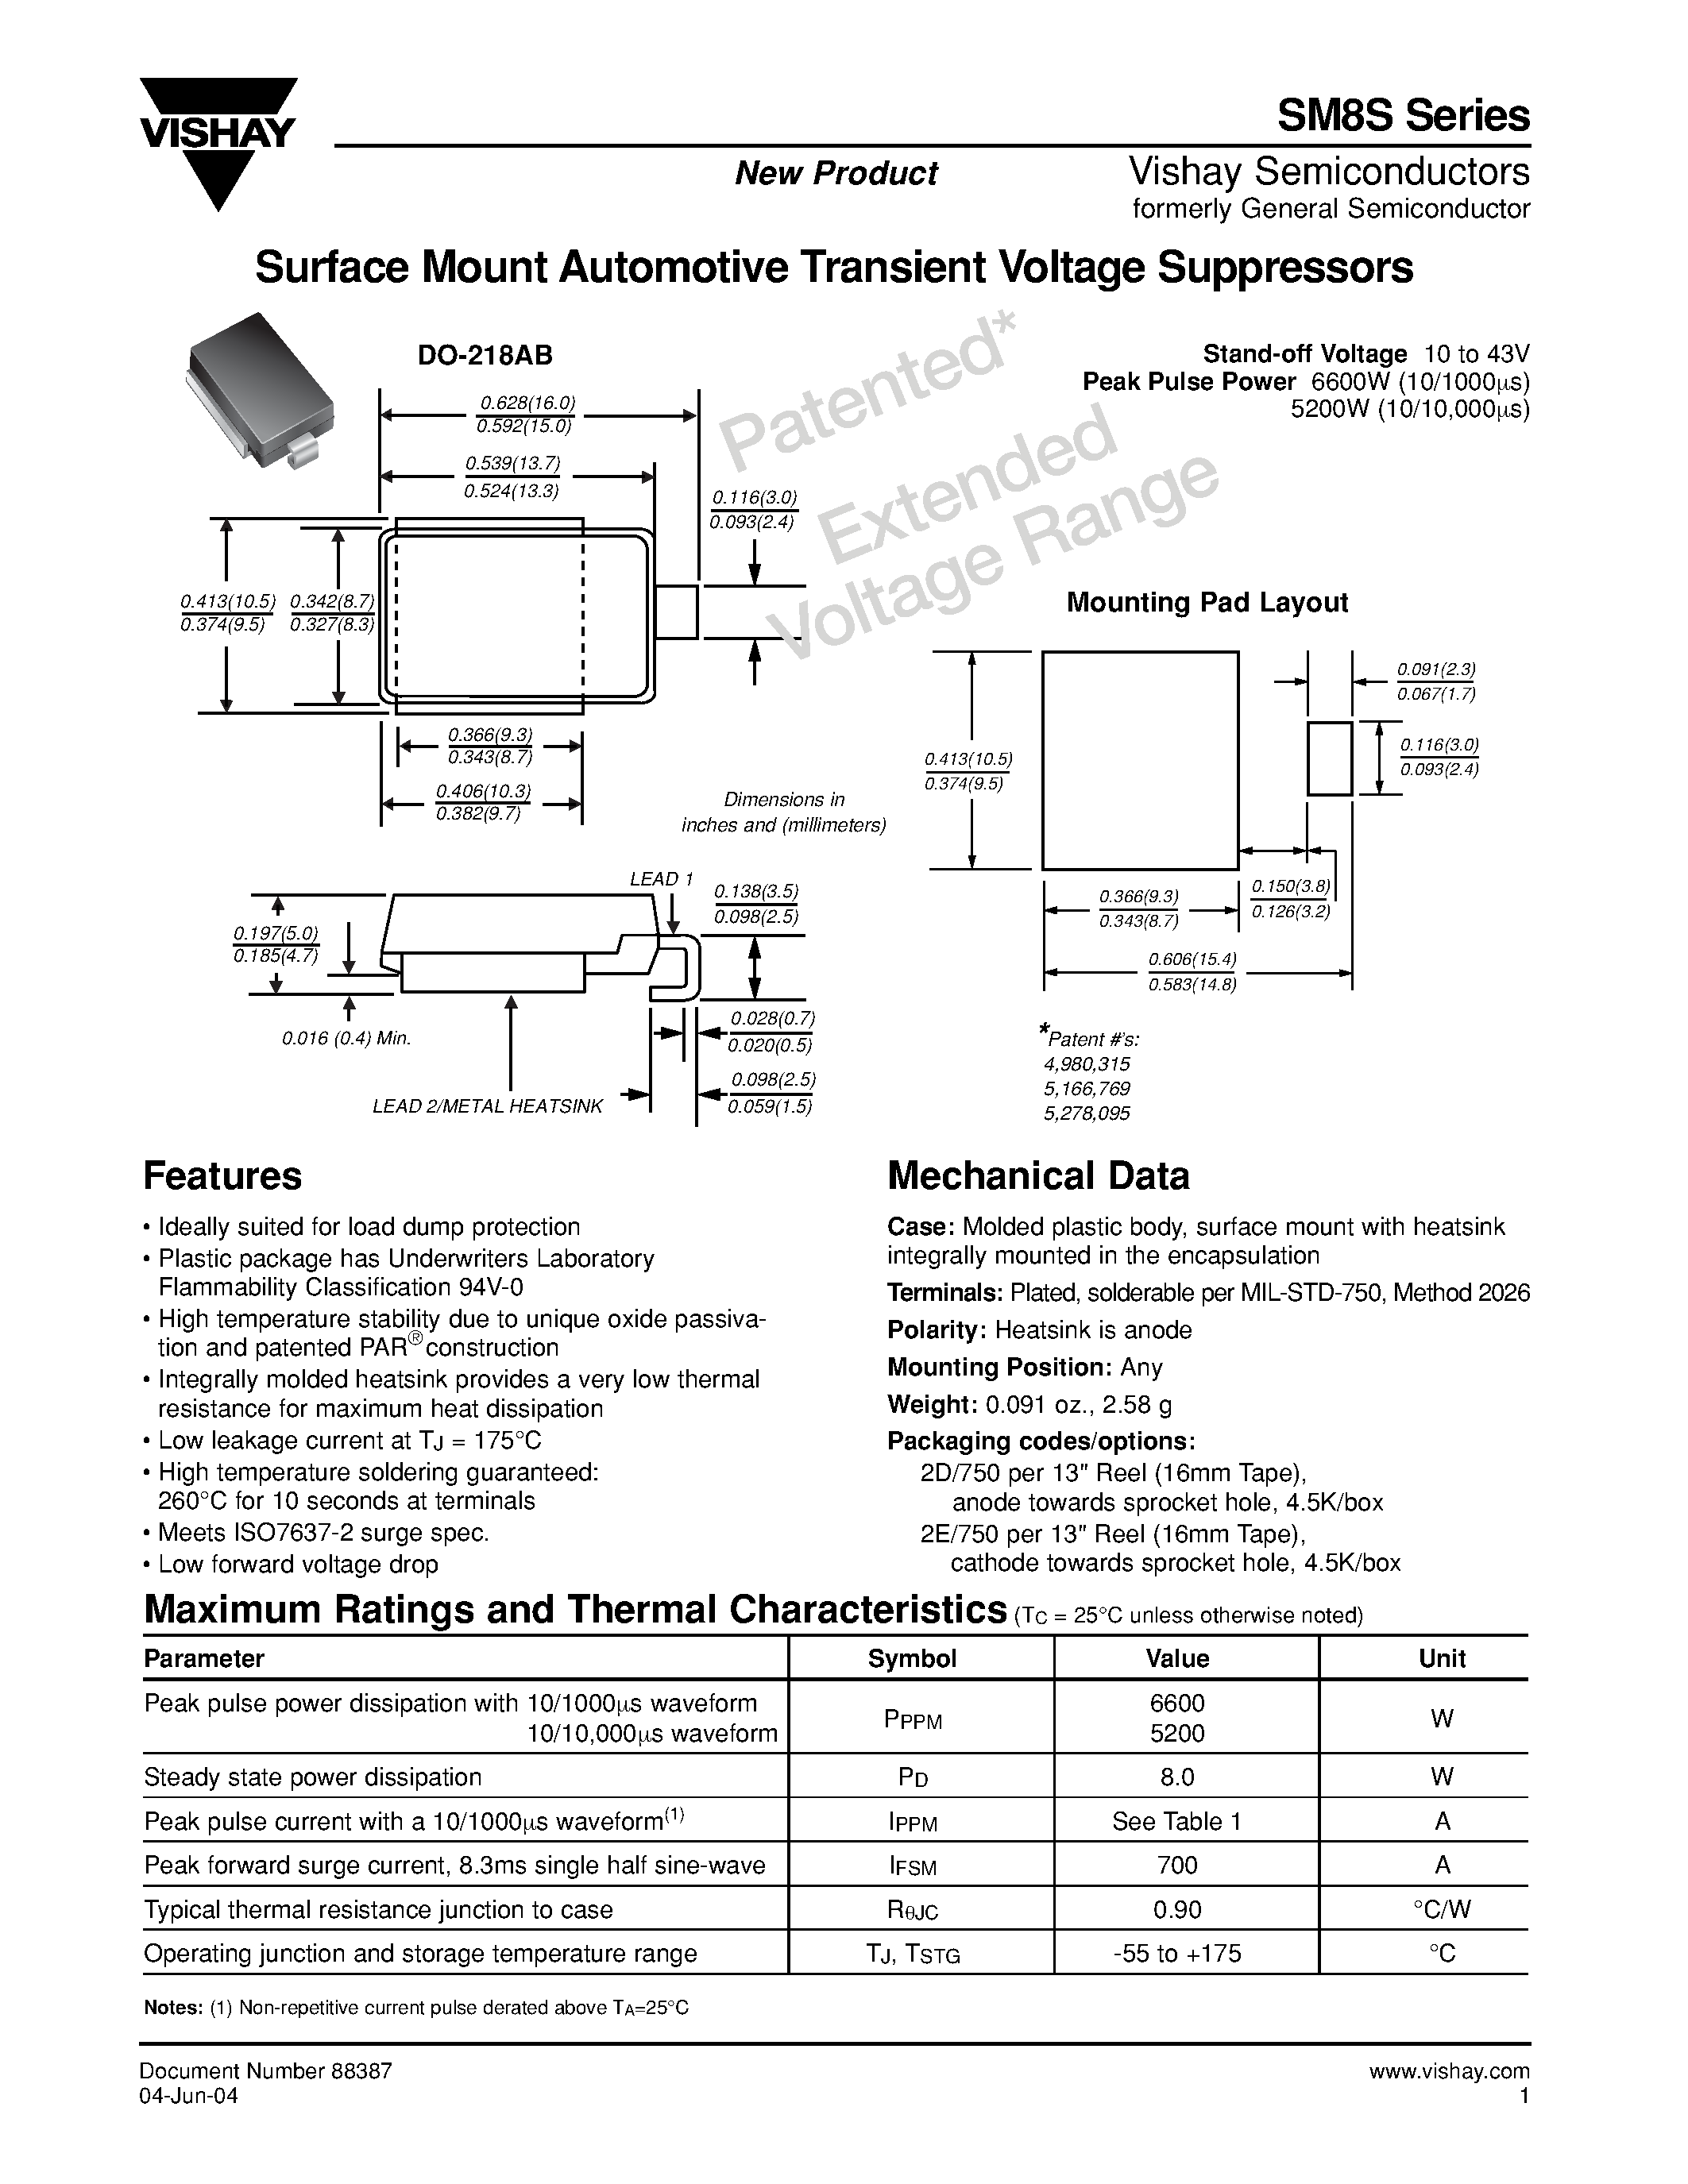 Даташит SM8S13A - Surface Mount Automotive Transient Voltage Suppressors страница 1